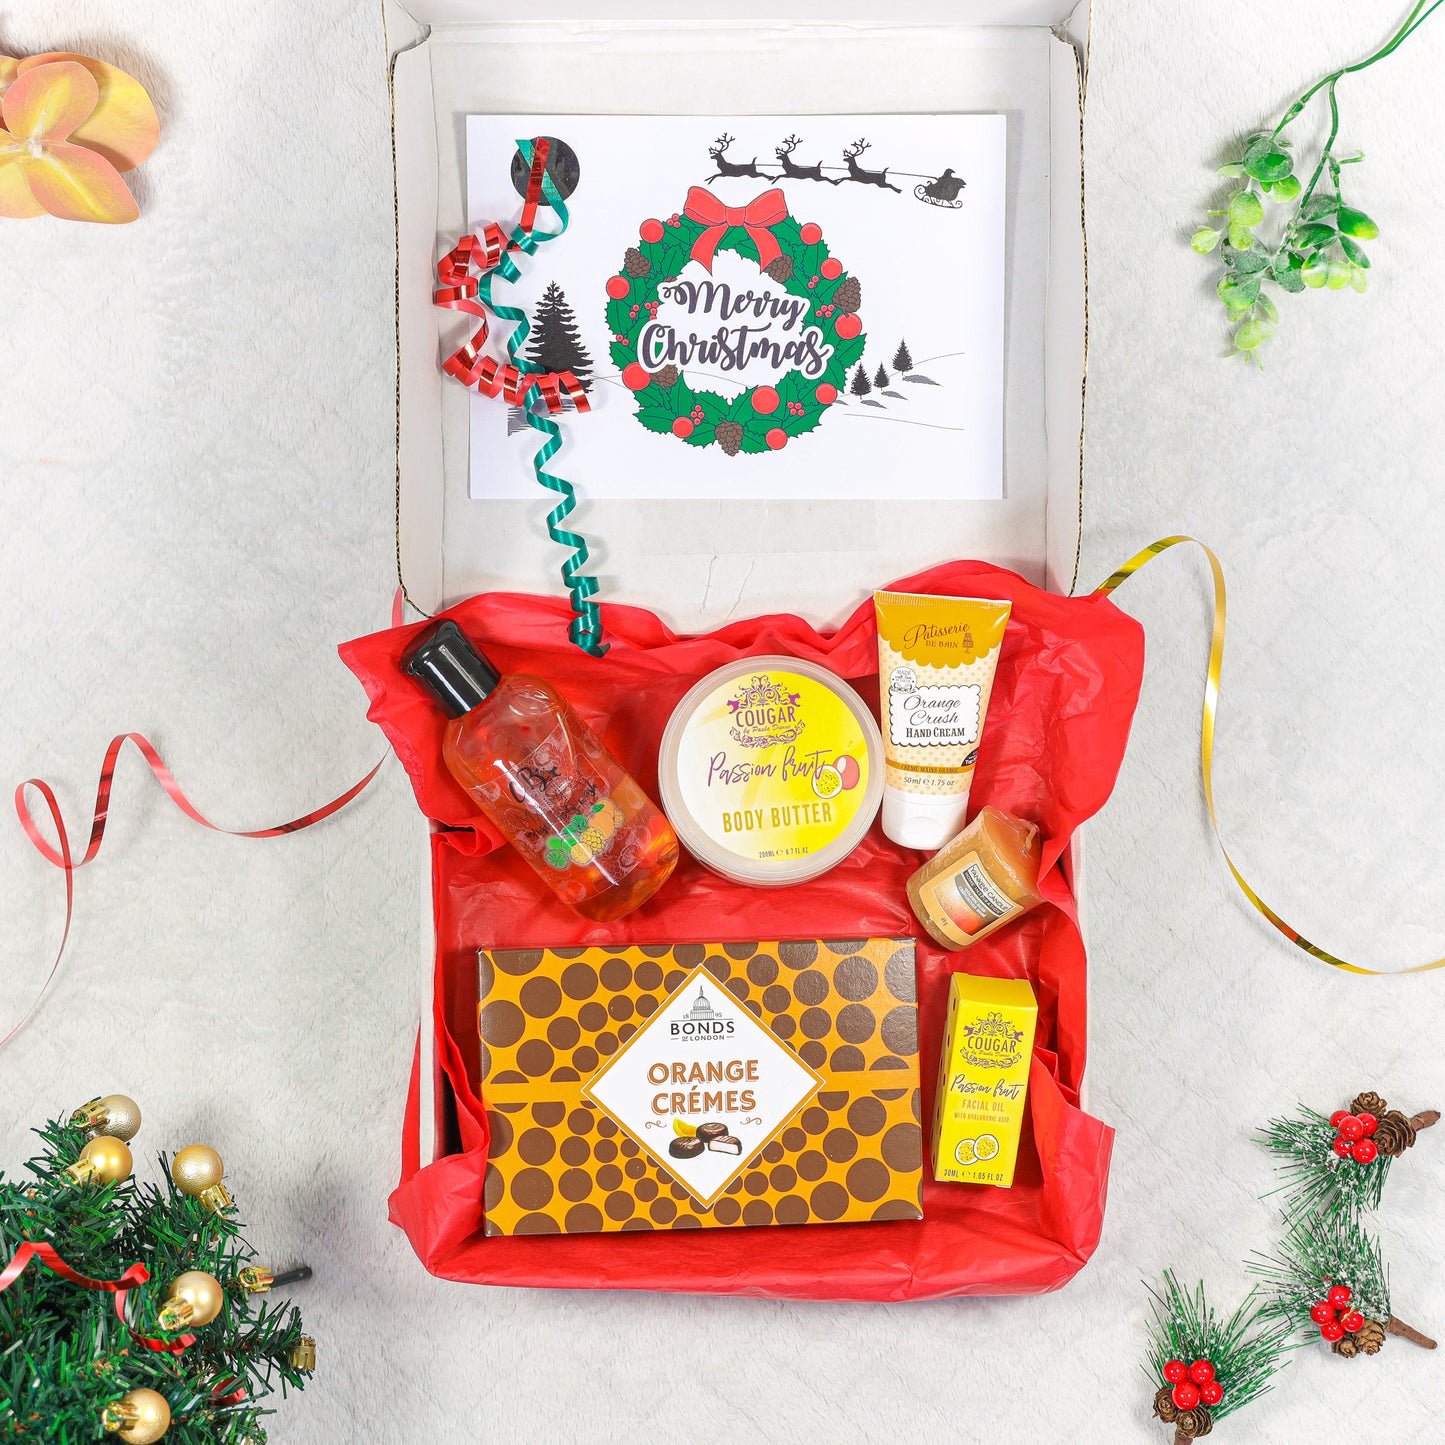 Passionfruit Pamper Hamper Skincare Gift Box  - Always Looking Good -   